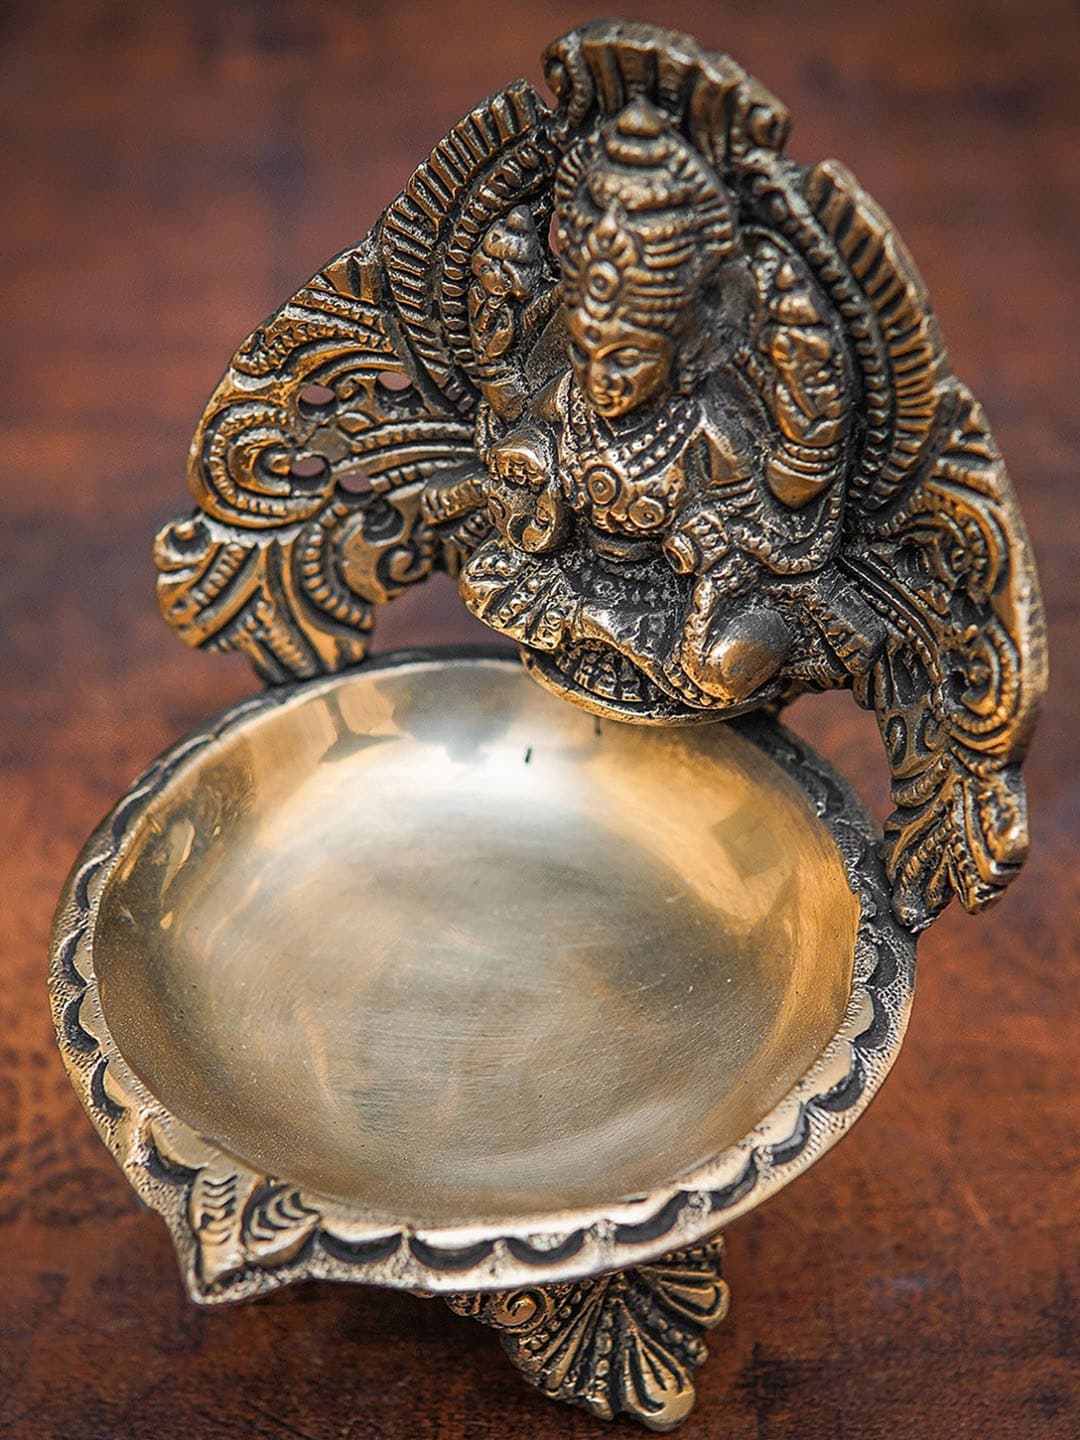 StatueStudio Gold-Toned Lakshmi Diya Pooja Essentials Price in India